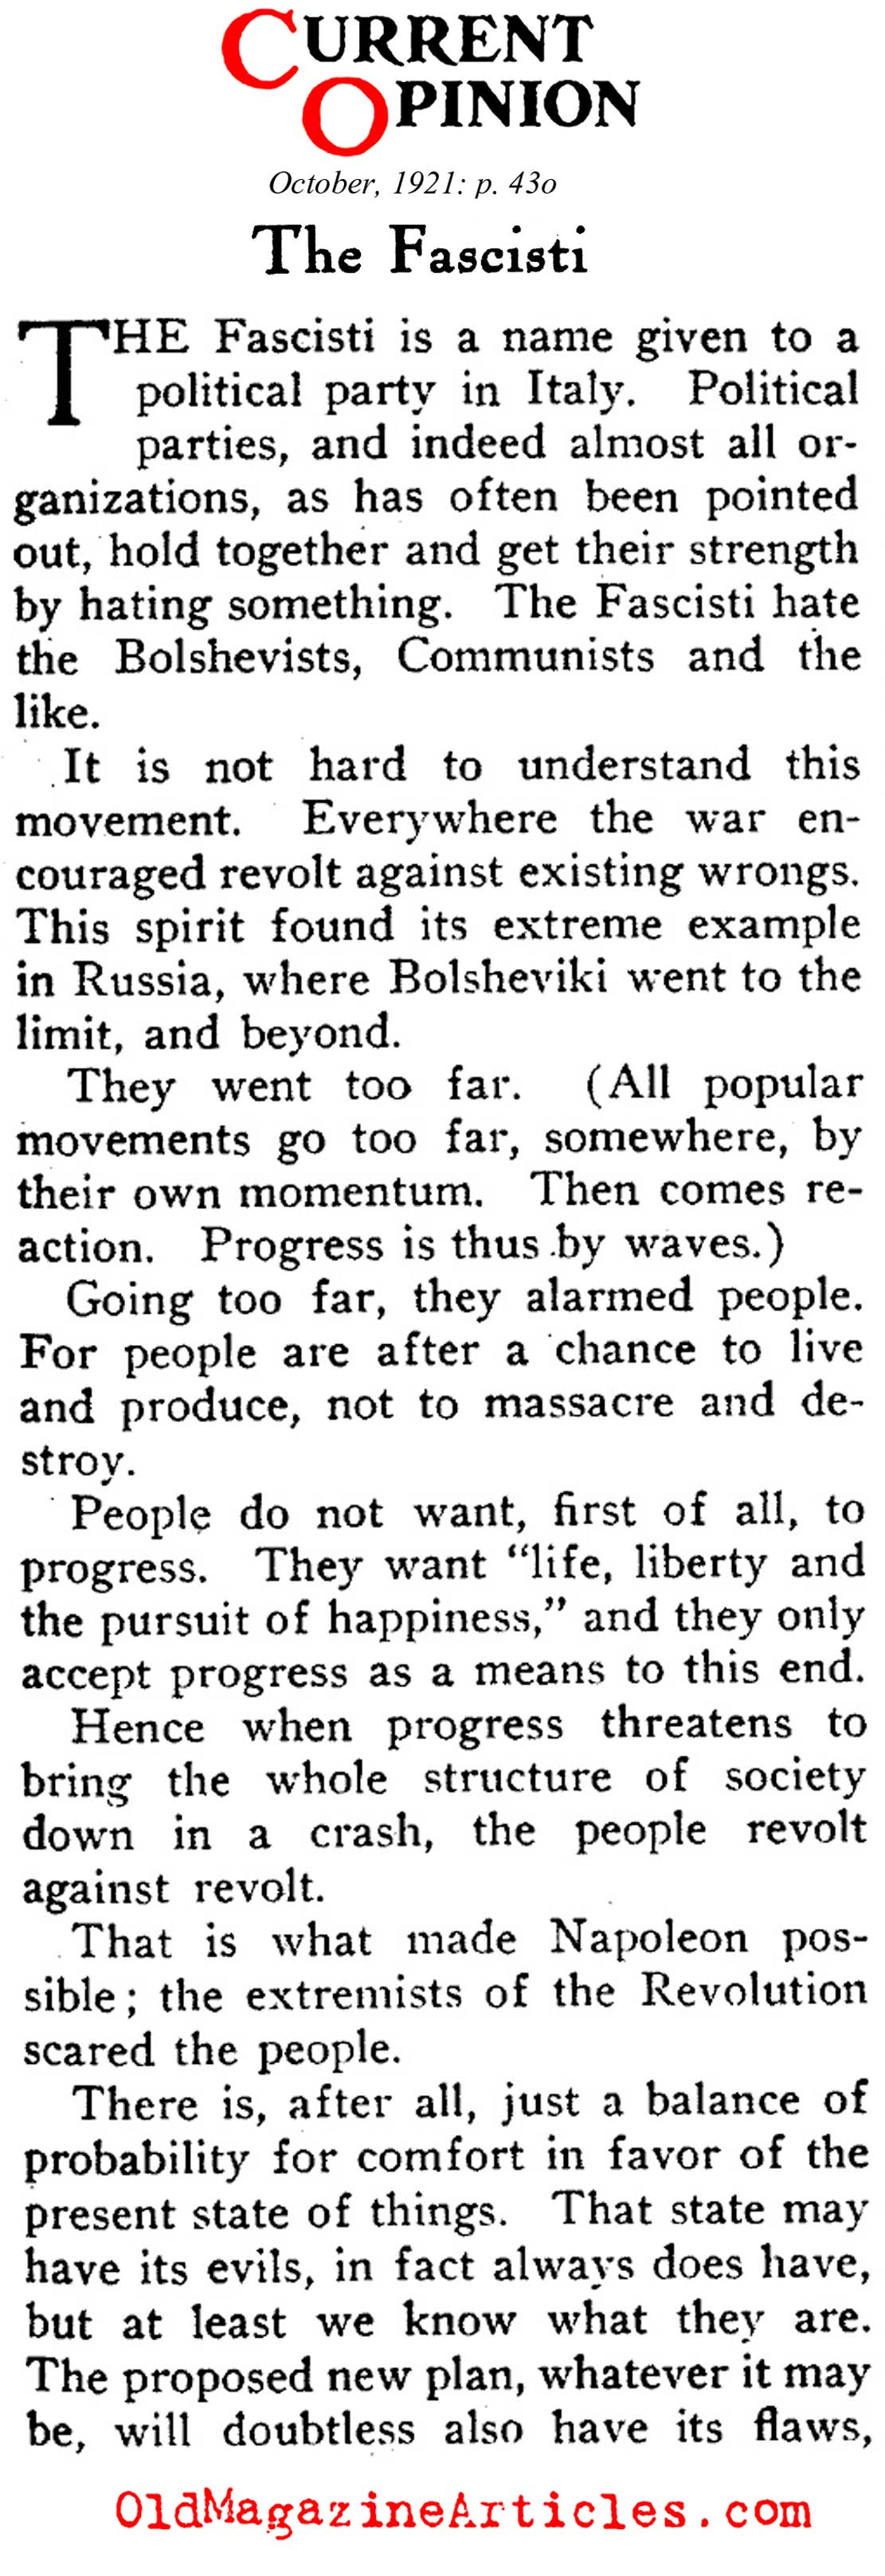 The Fascisti (Current Opinion, 1921)